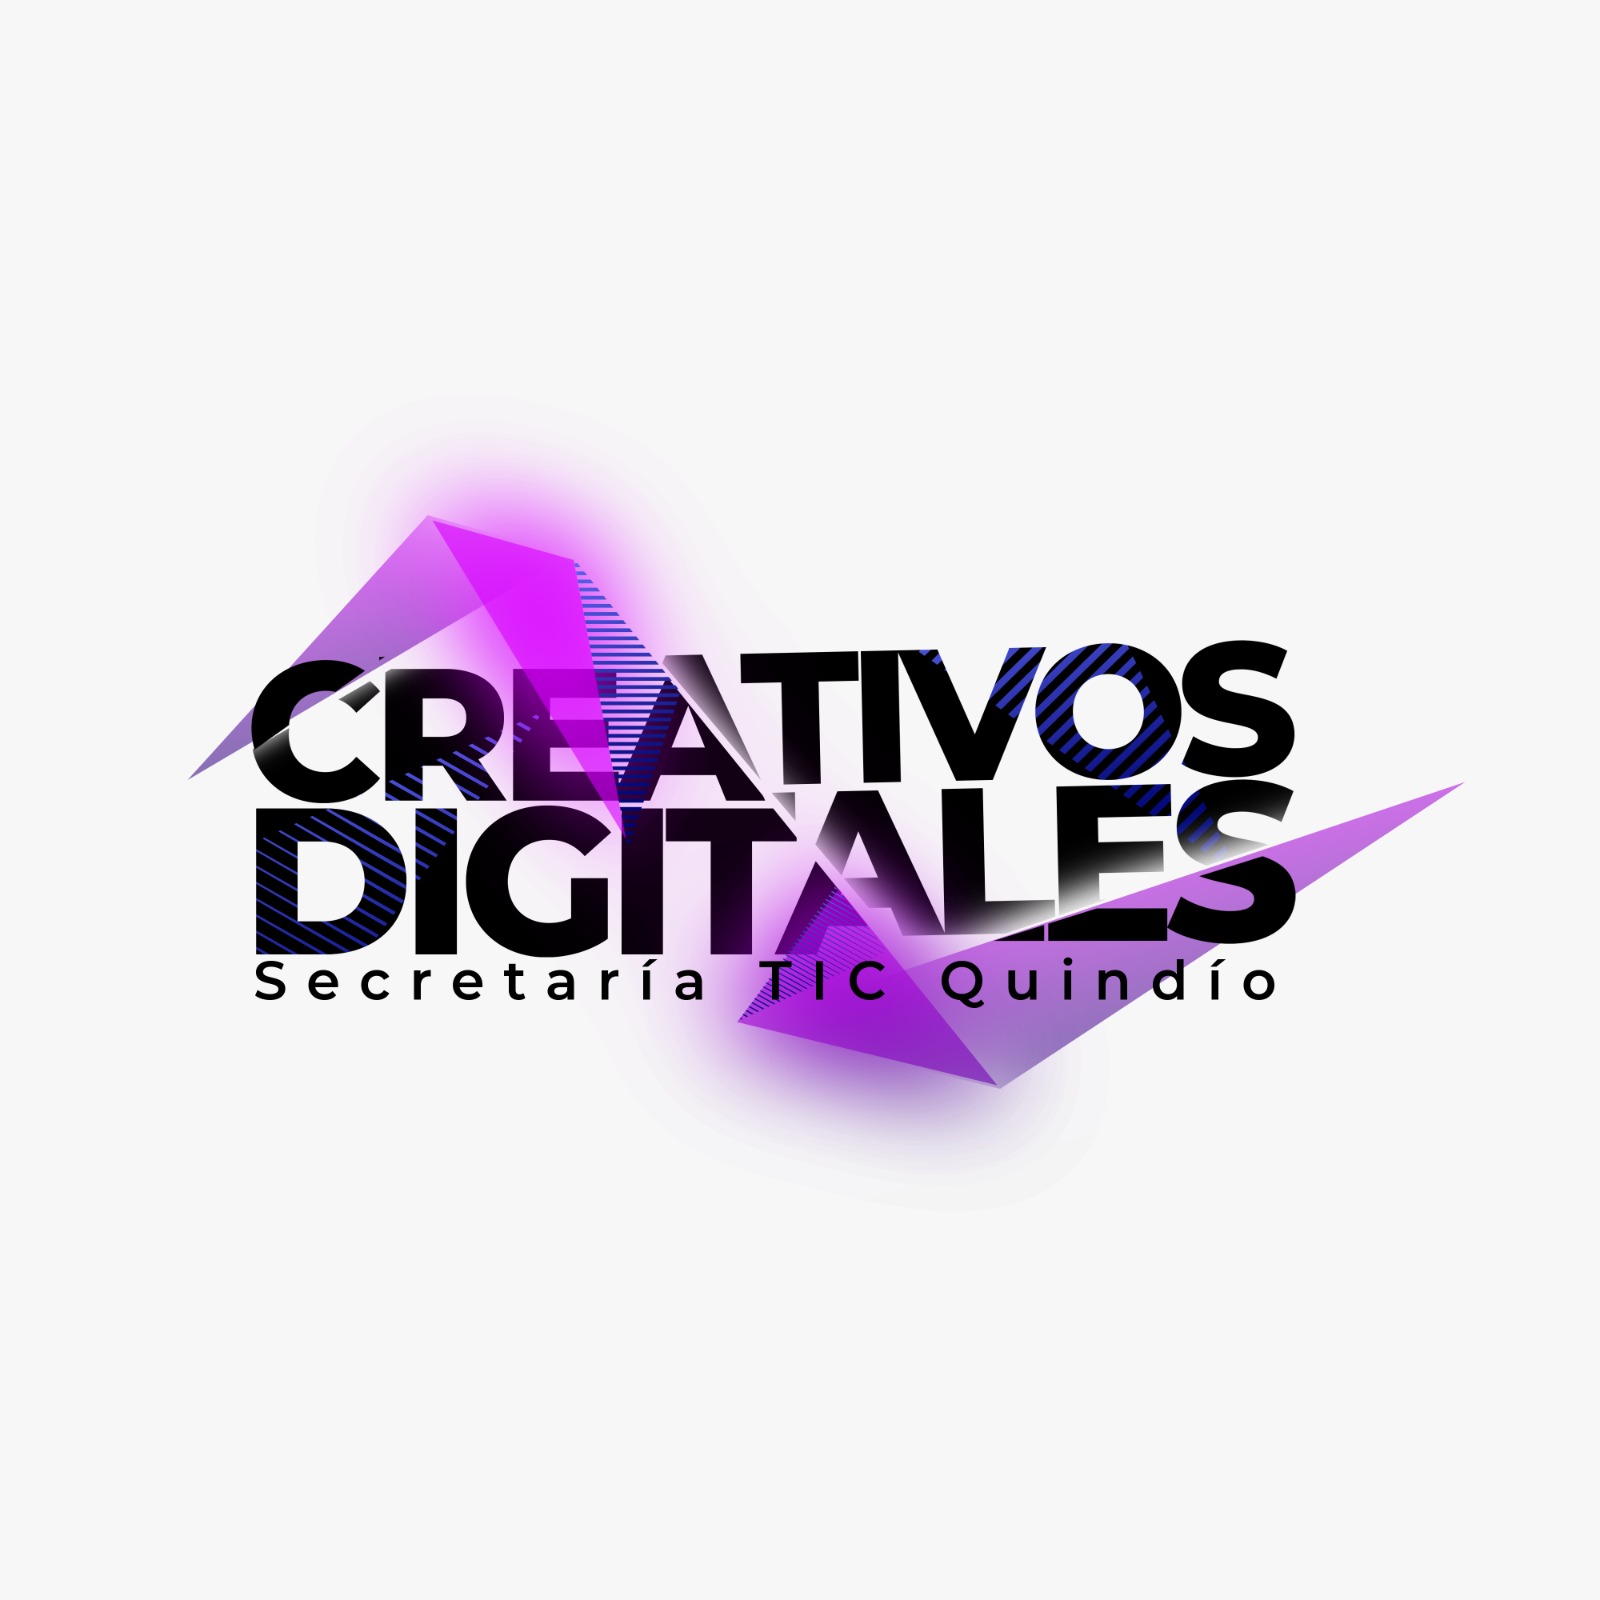 Creativos_digitales.jpg - 123.49 kB